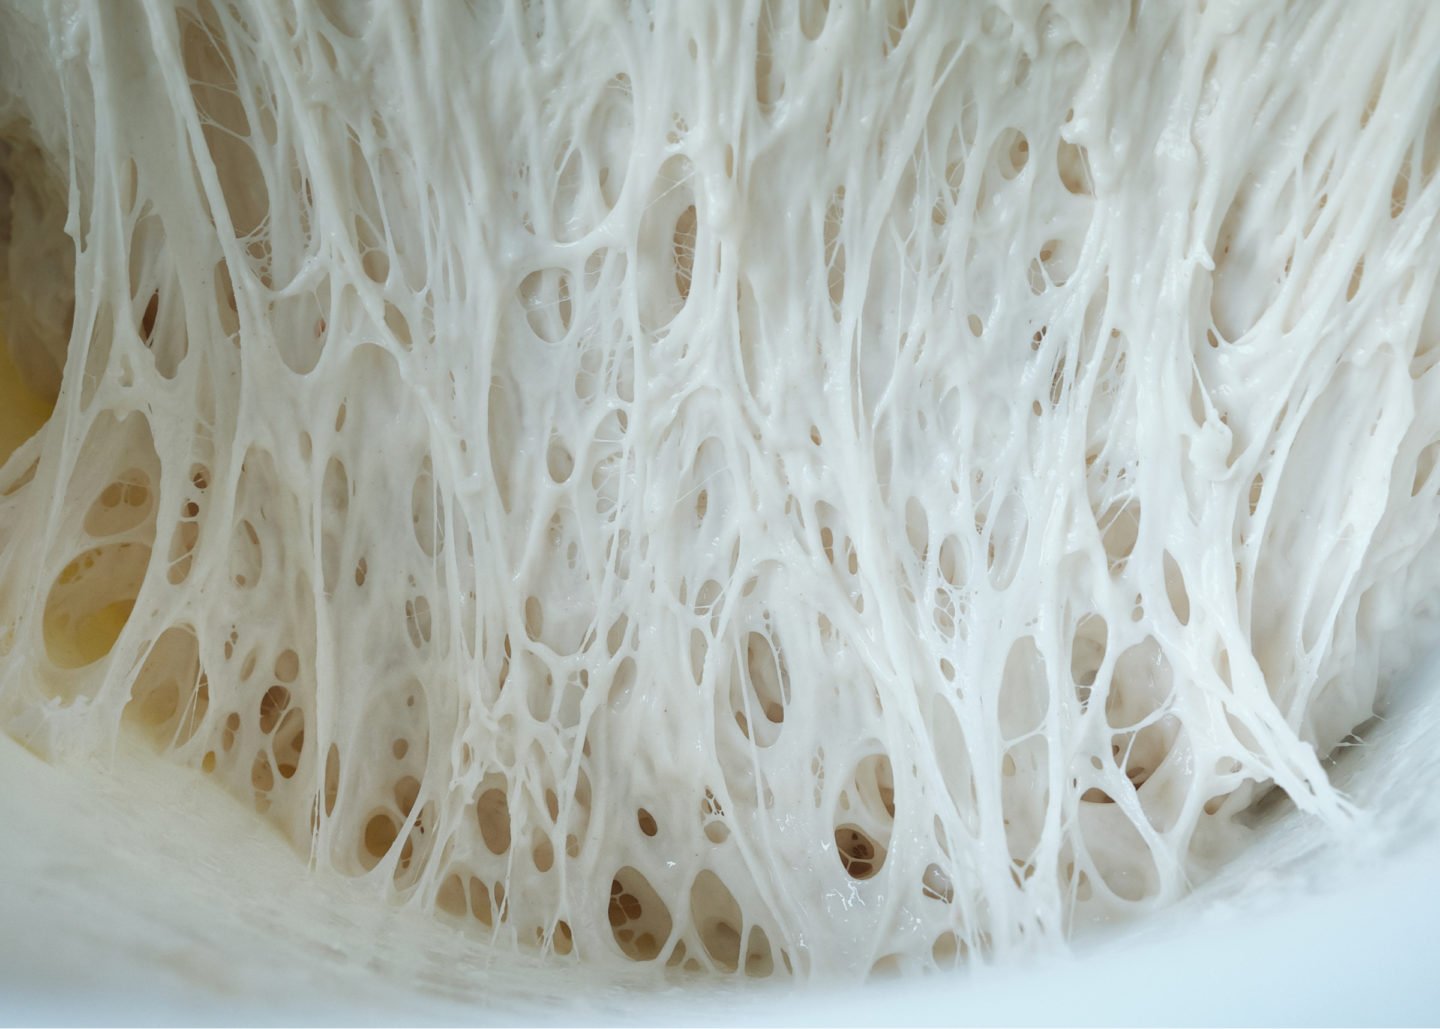 gluten structure of fermented dough